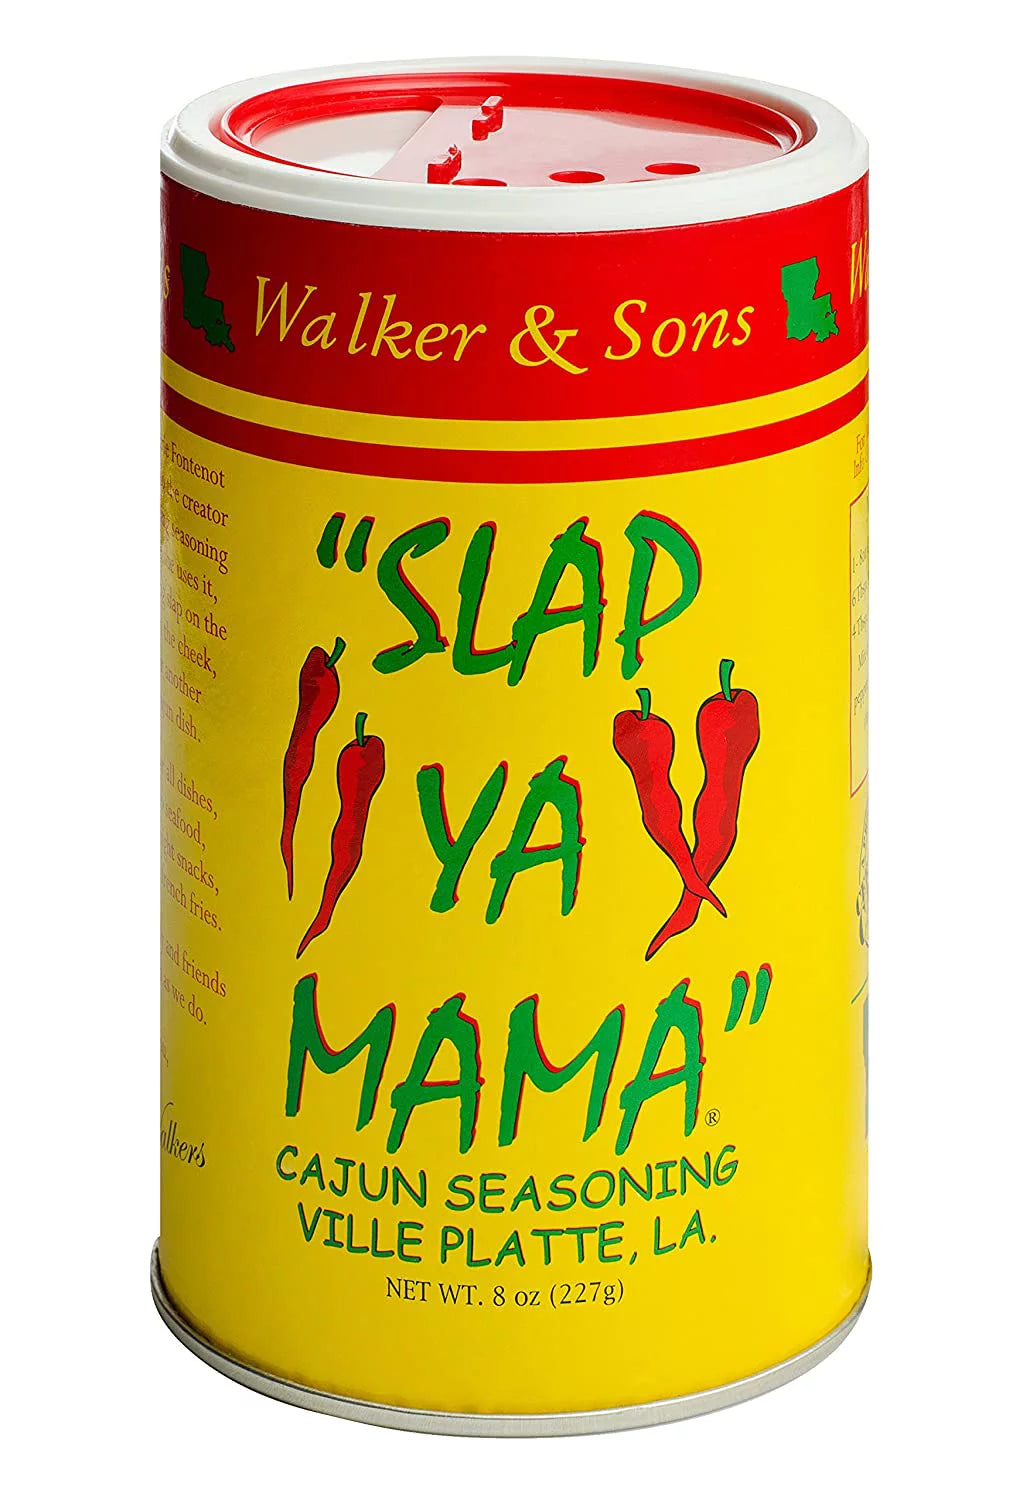 Slap Ya Mama Original Seasoning